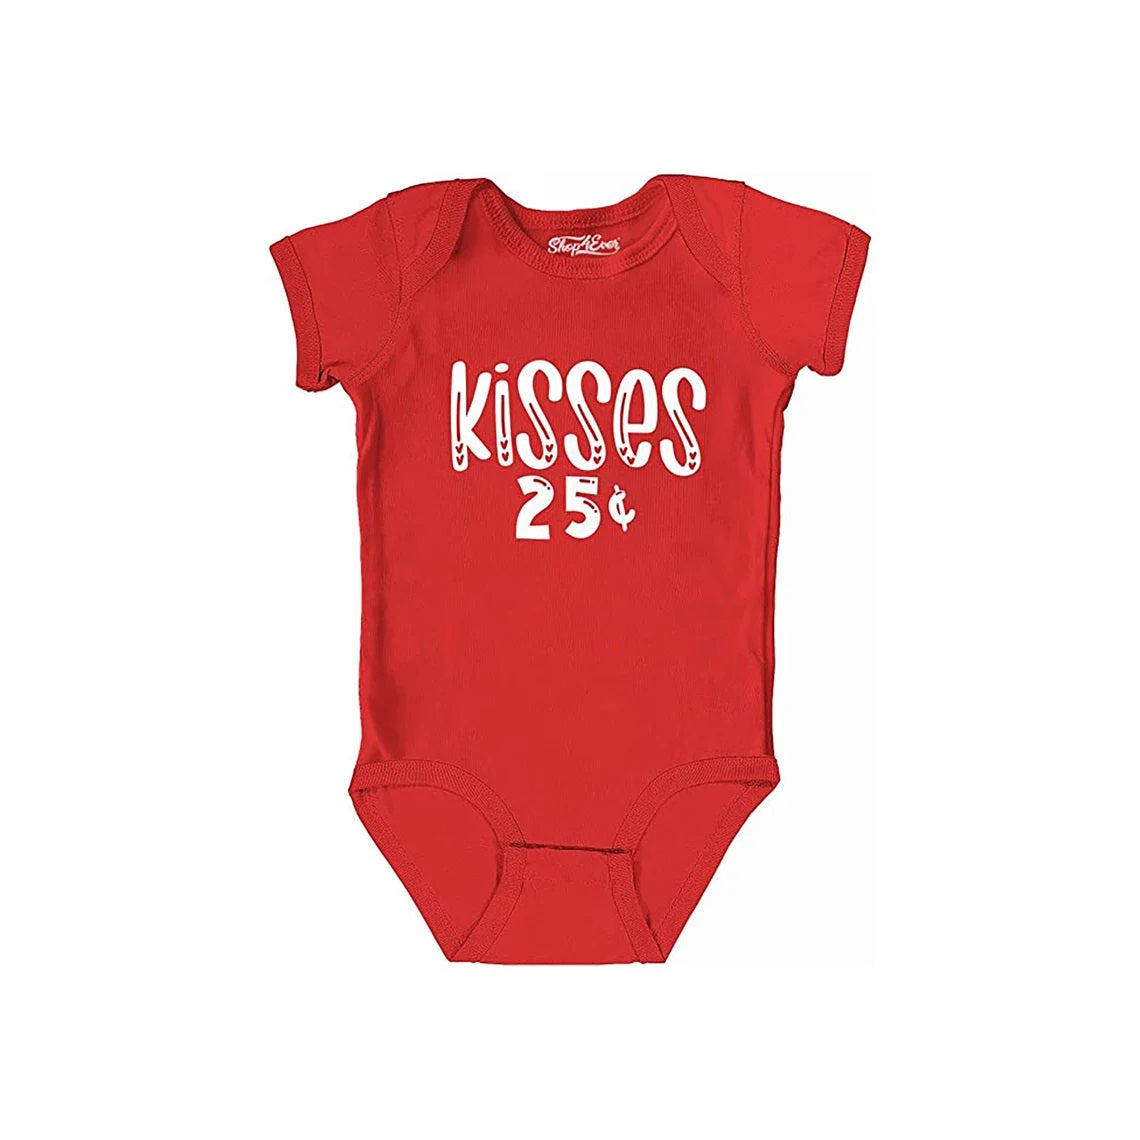 Kisses 25 Cents Valentine's Day Baby Bodysuit Cotton Romper